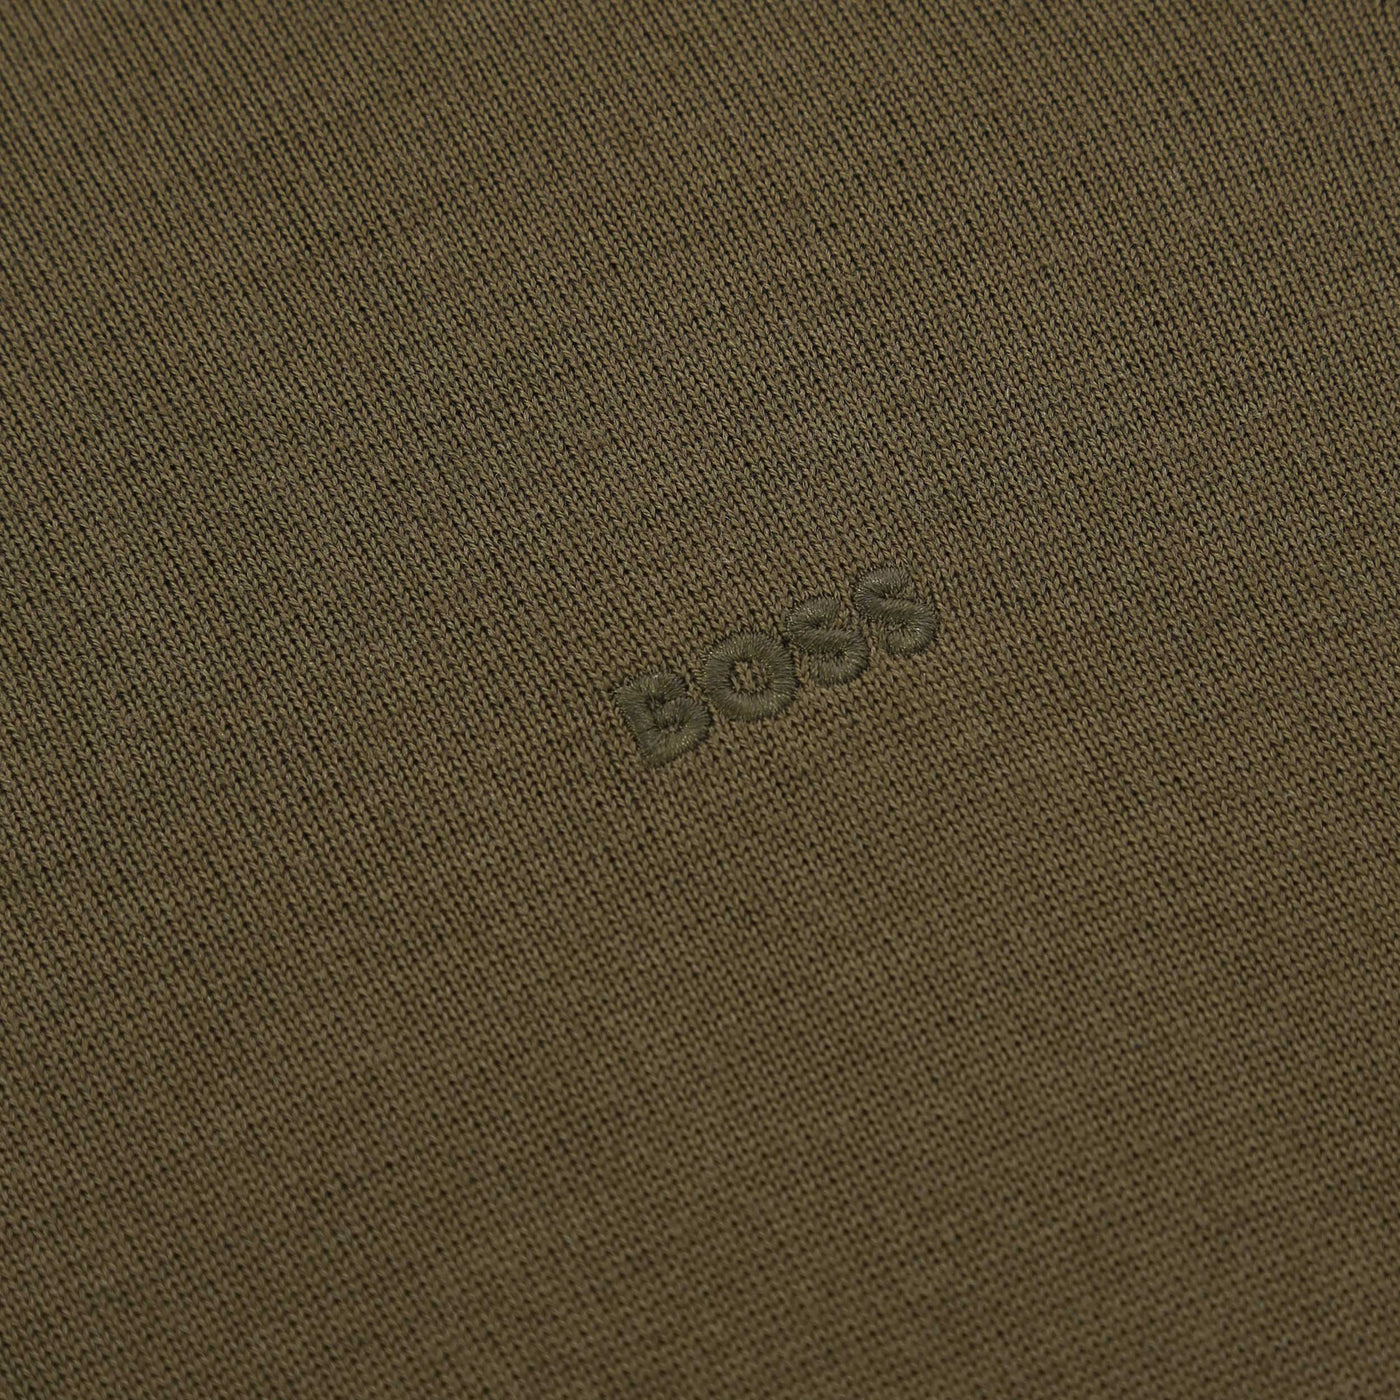 BOSS Botto L Knitwear in Mushroom logo